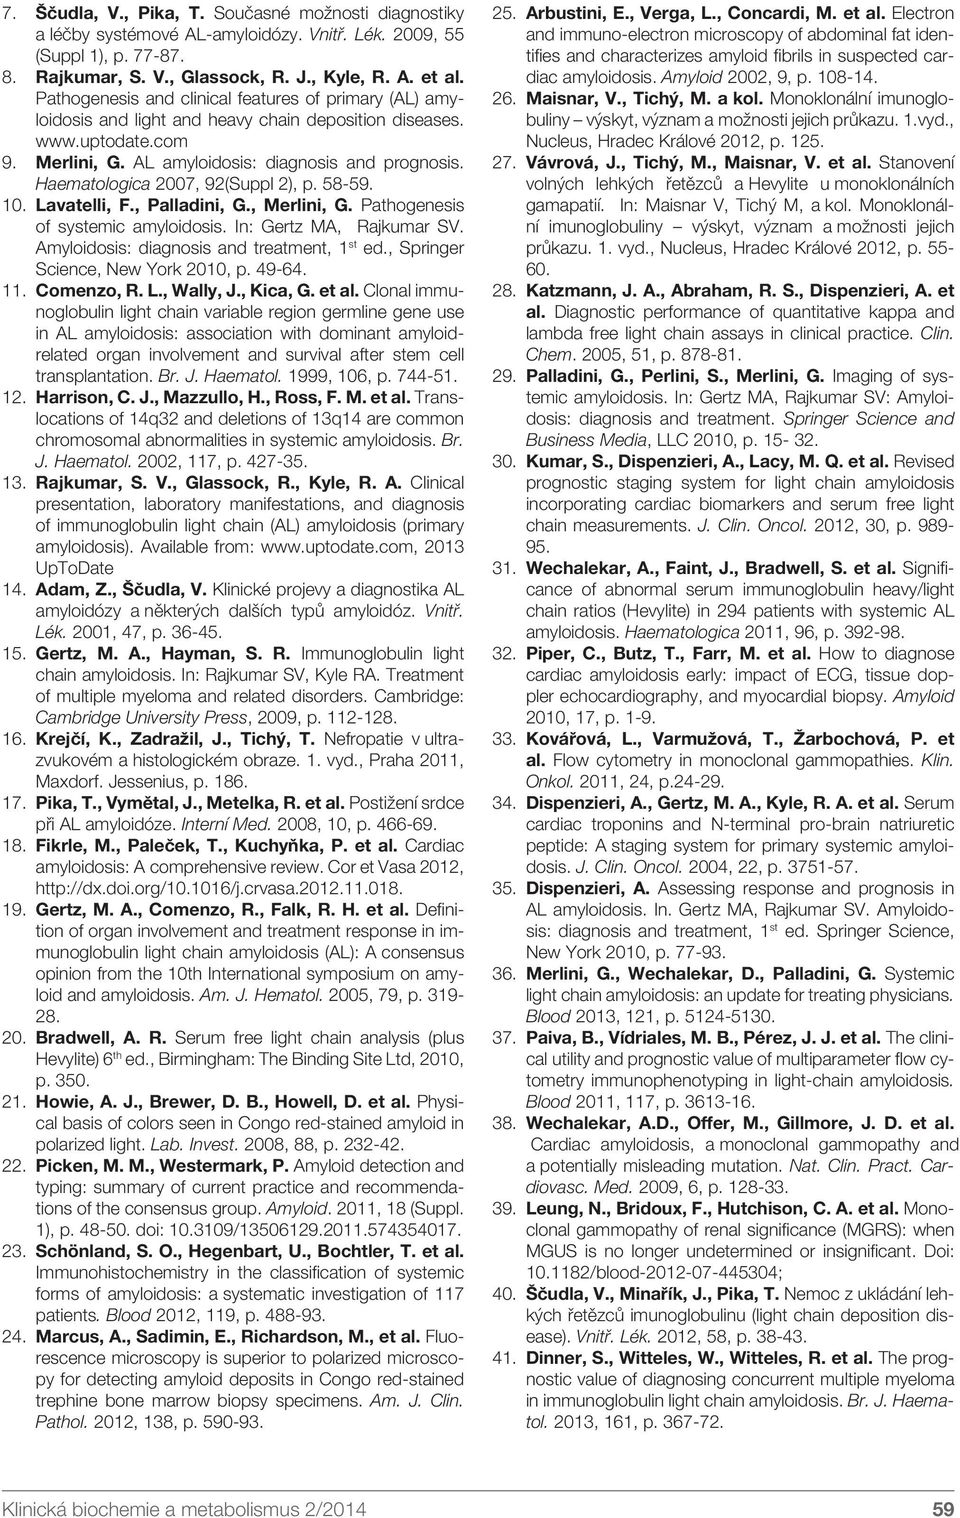 Haematologica 2007, 92(Suppl 2), p. 58-59. 10. Lavatelli, F., Palladini, G., Merlini, G. Pathogenesis of systemic amyloidosis. In: Gertz MA, Rajkumar SV. Amyloidosis: diagnosis and treatment, 1 st ed.